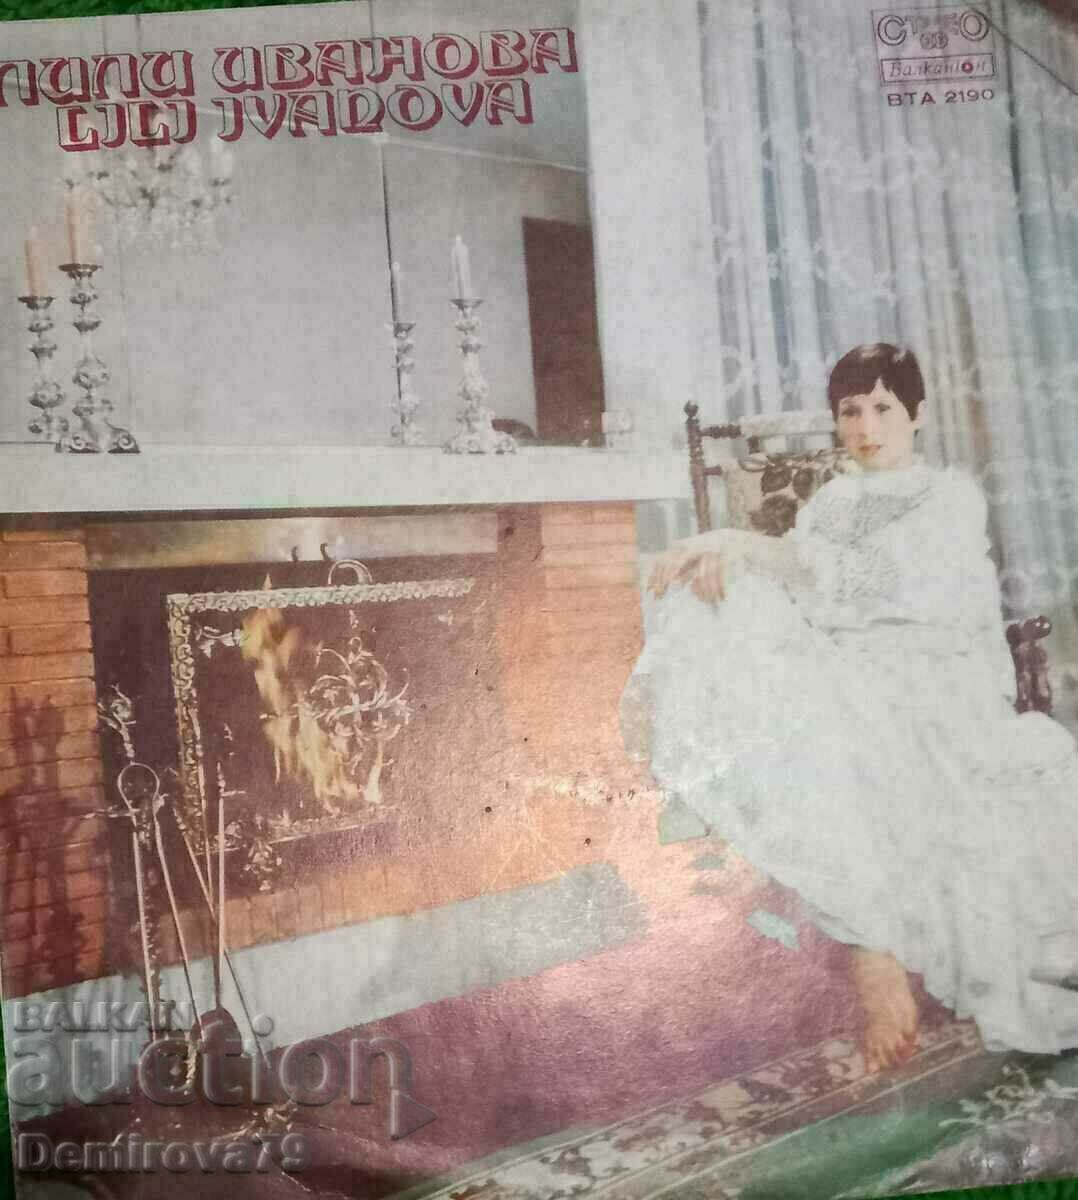 Gramophone records of Lili Ivanova